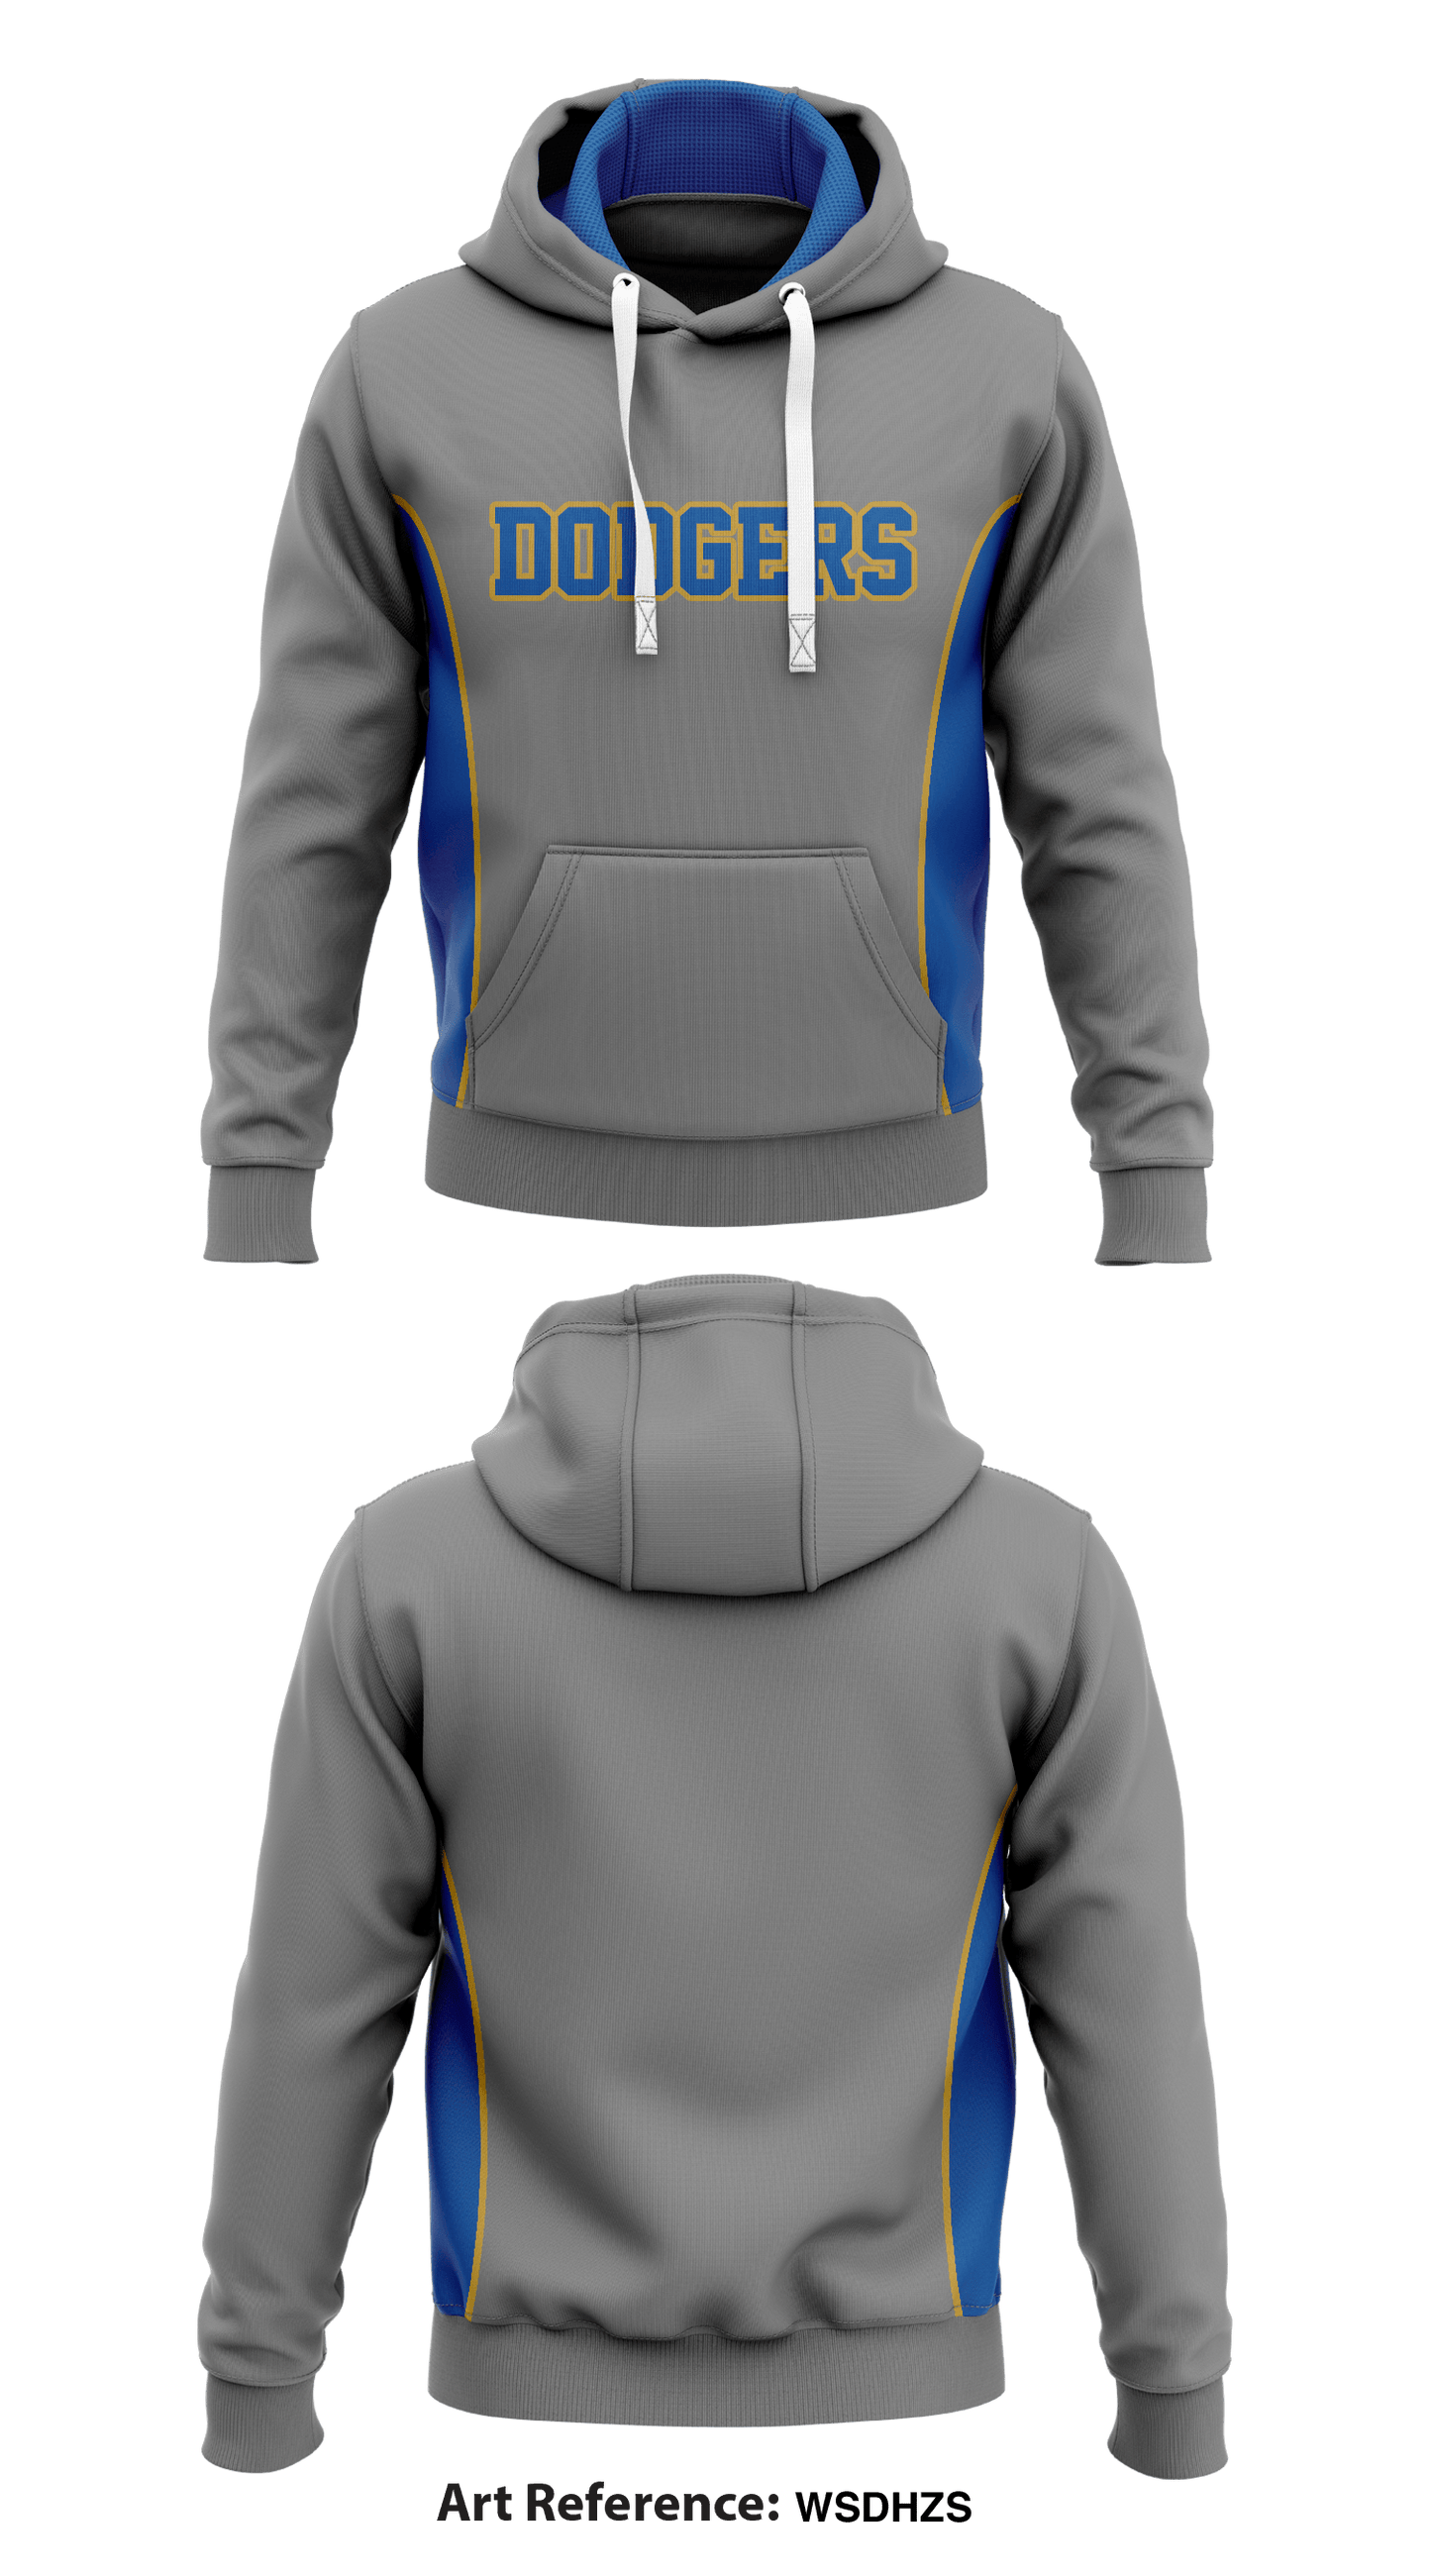 Dodgers Store 1  Core Men's Hooded Performance Sweatshirt - WSDHZS